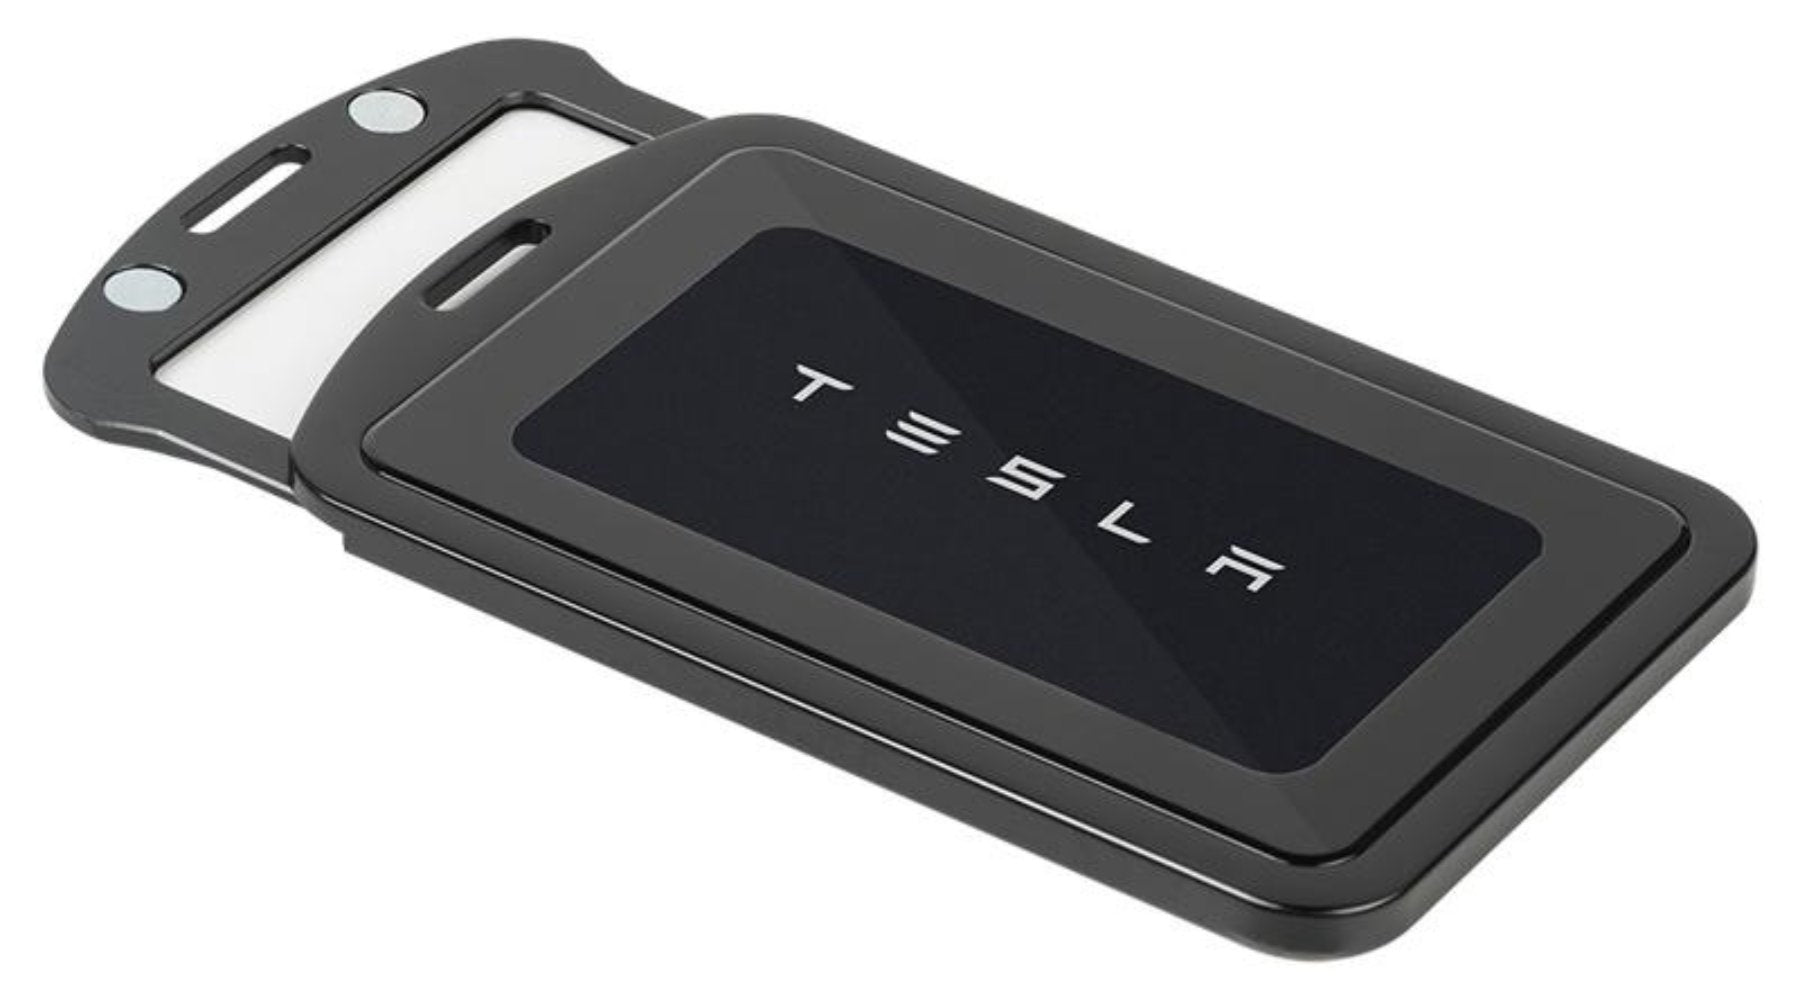 Best Tesla Model 3 Key Card of 2022 - TALSEM